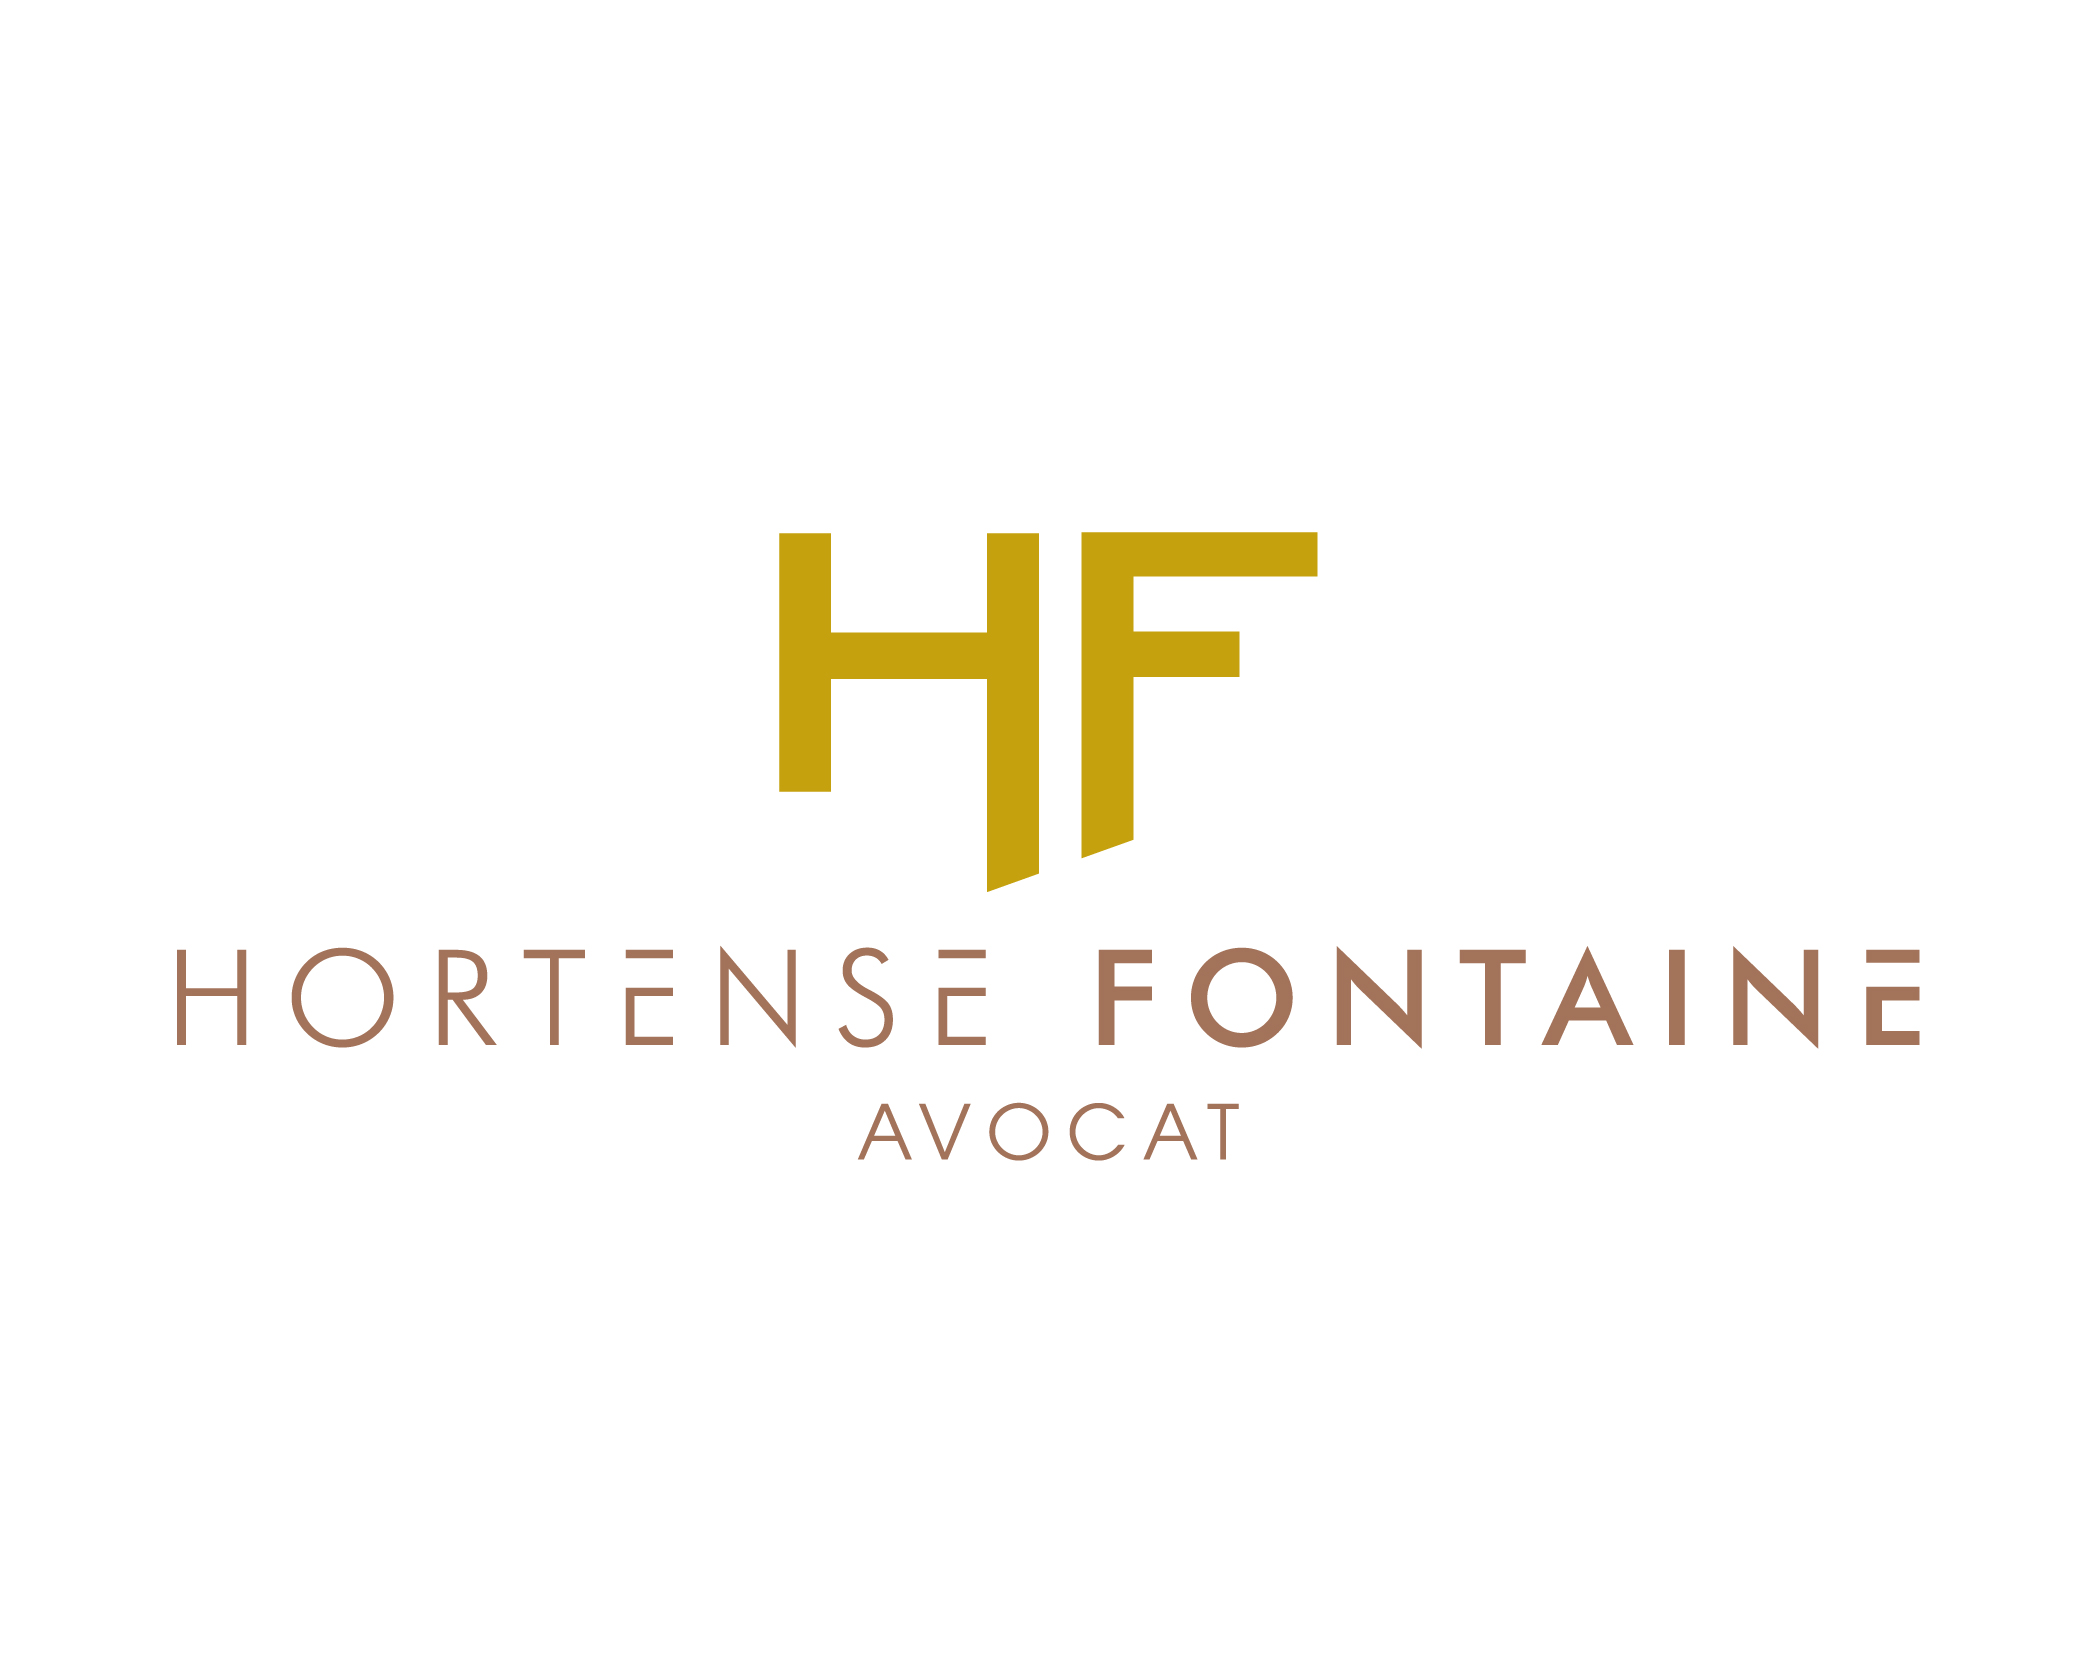 Hortense fontaine